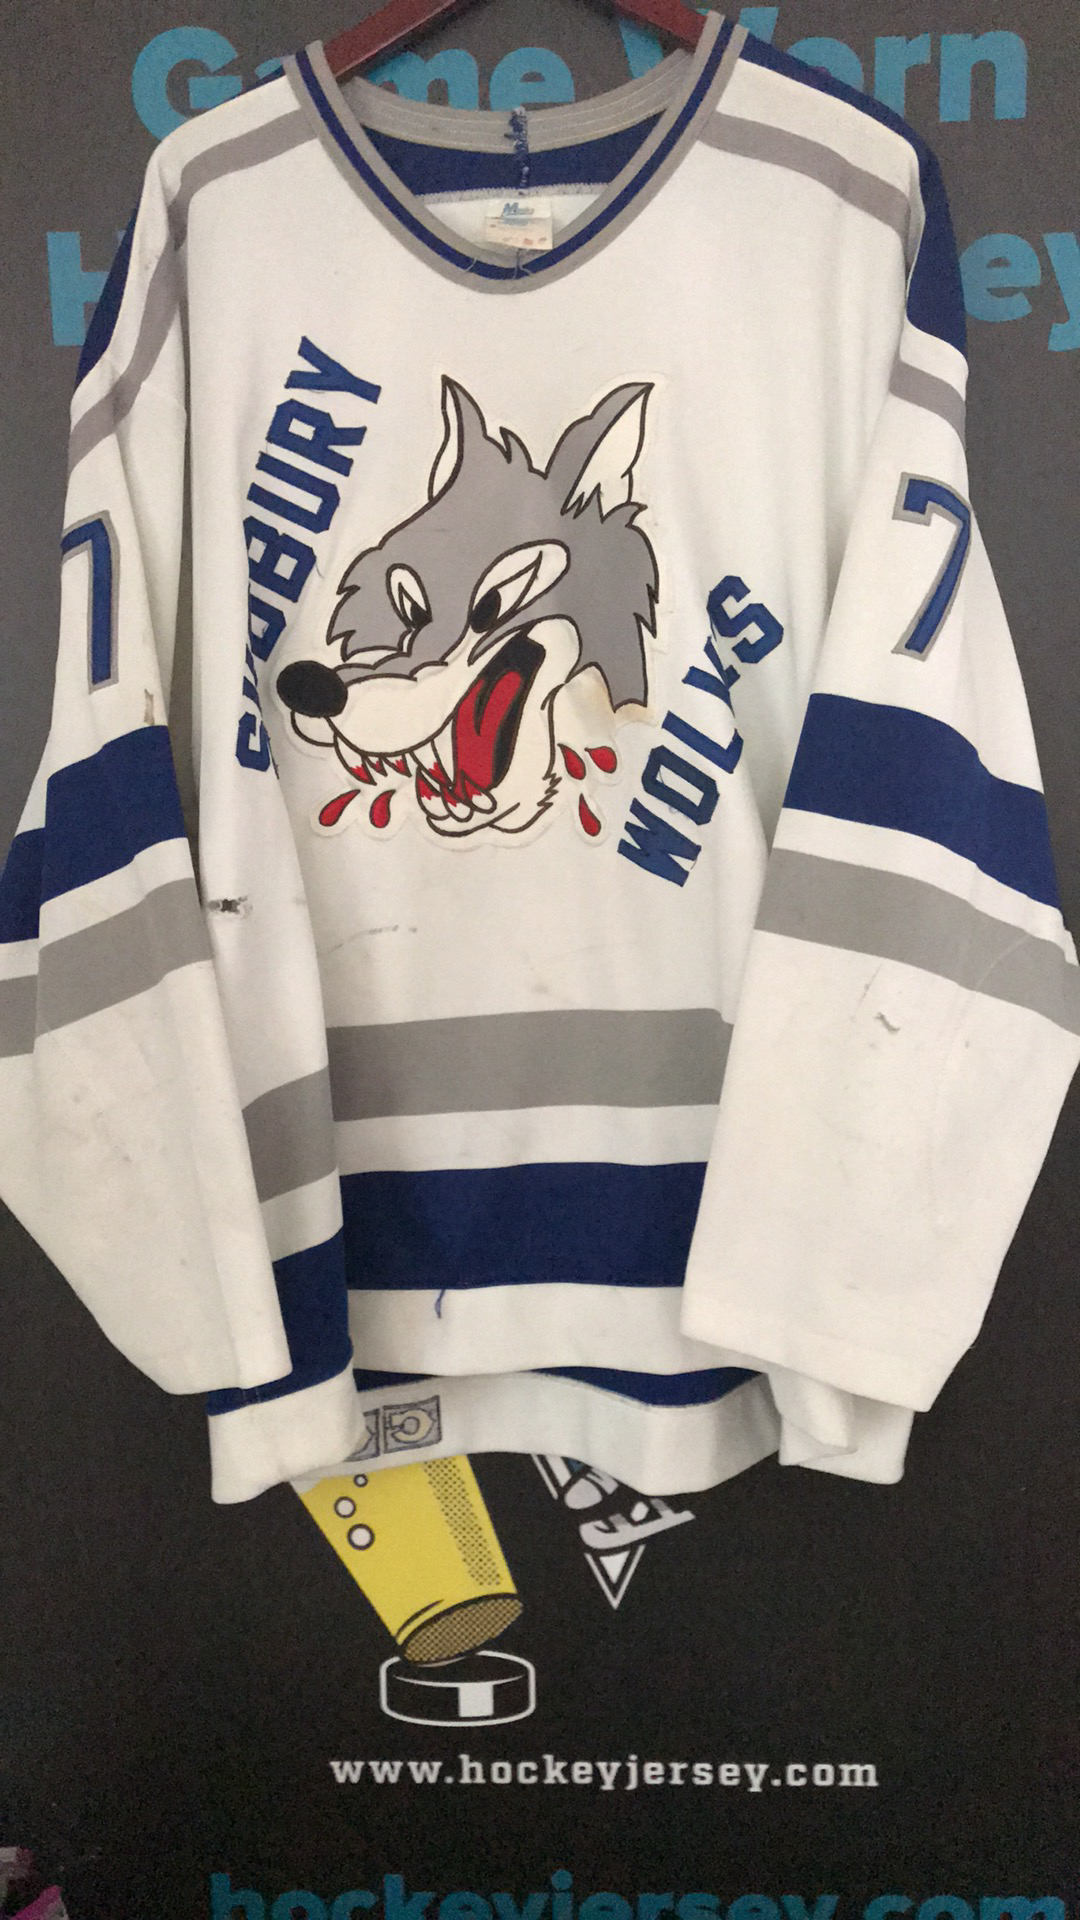 1990's CHL Sudbury Wolves Game worn hockey jersey.